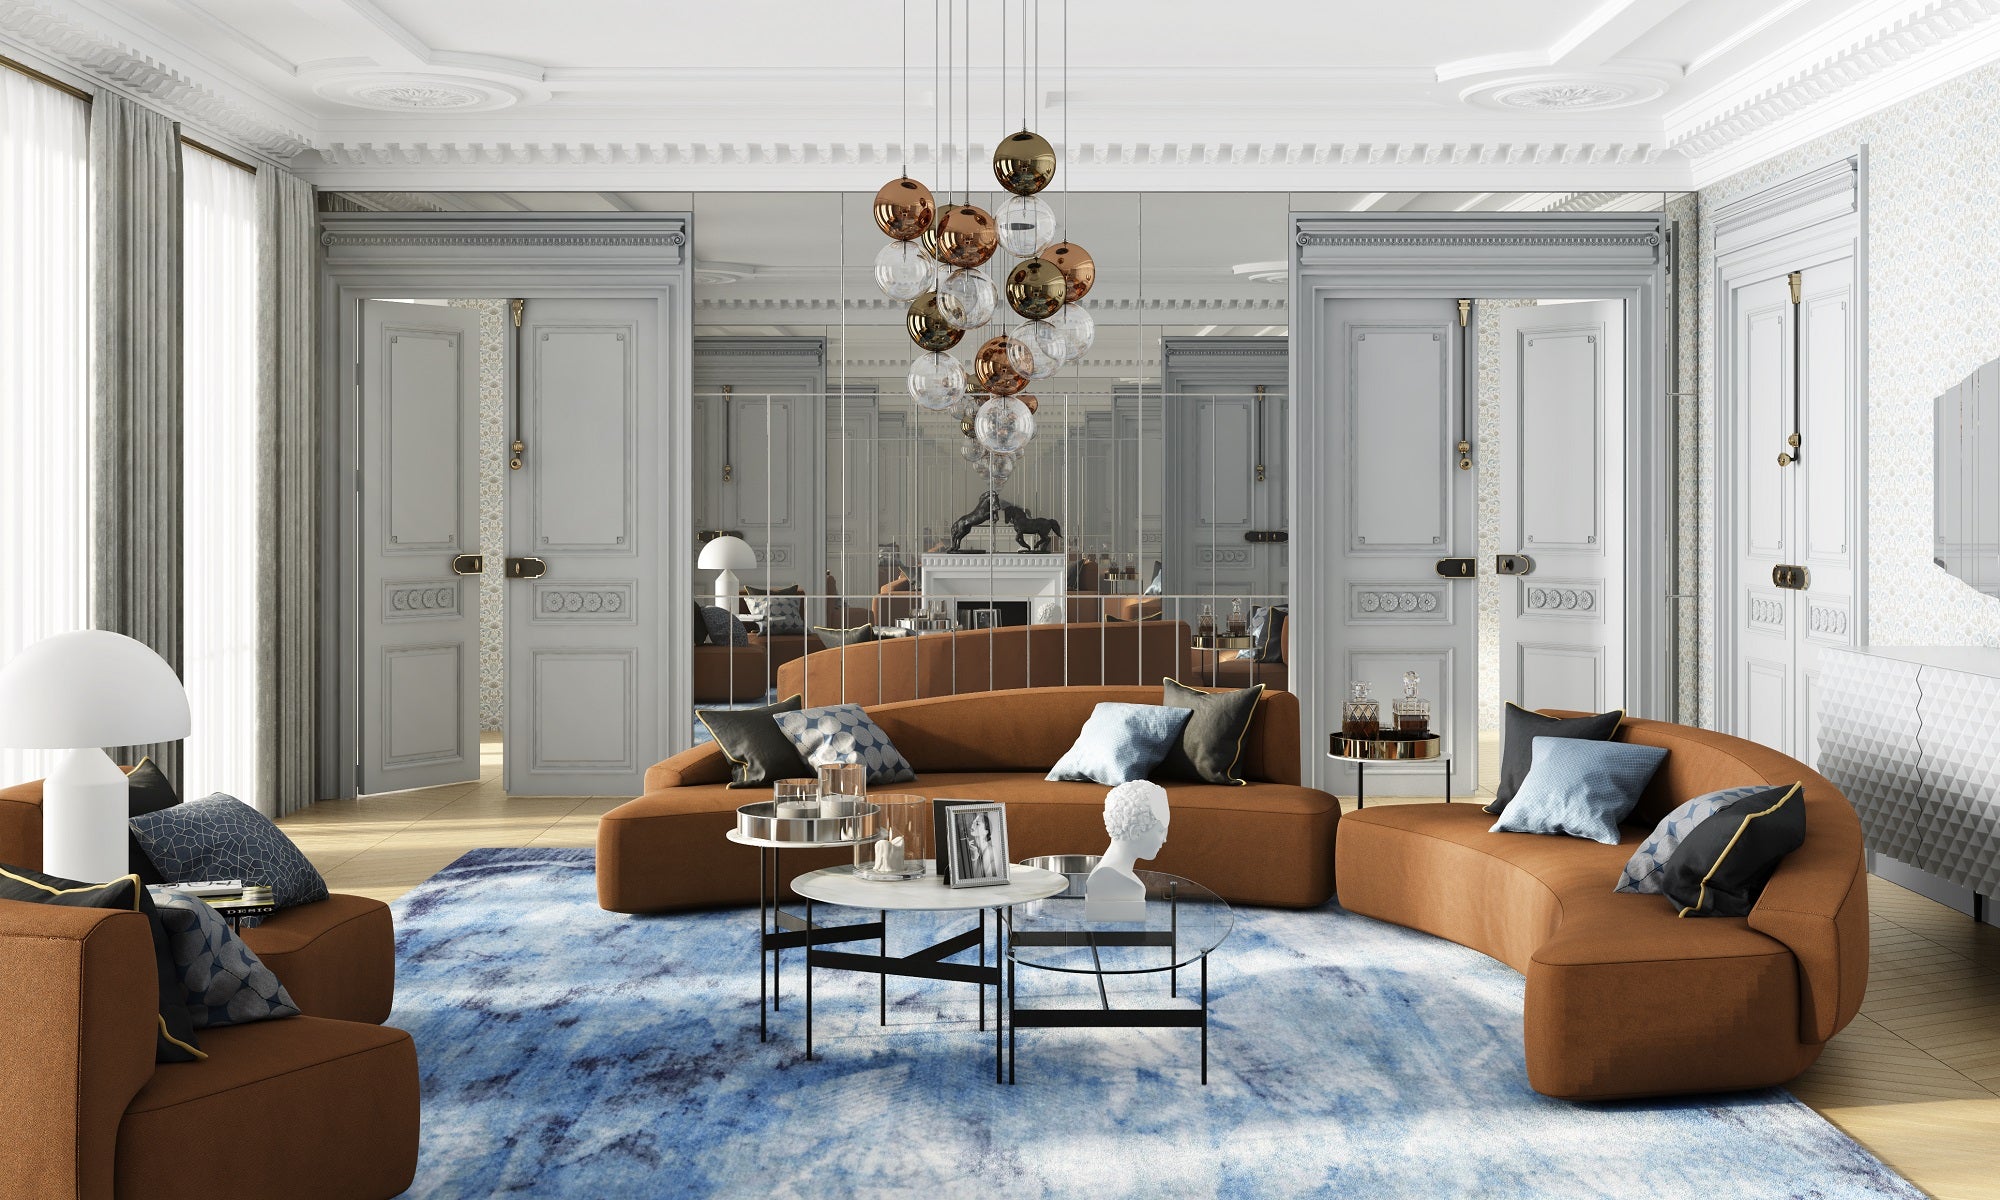 Sofa MOON - kolor do wyboru Absynth    Eye on Design